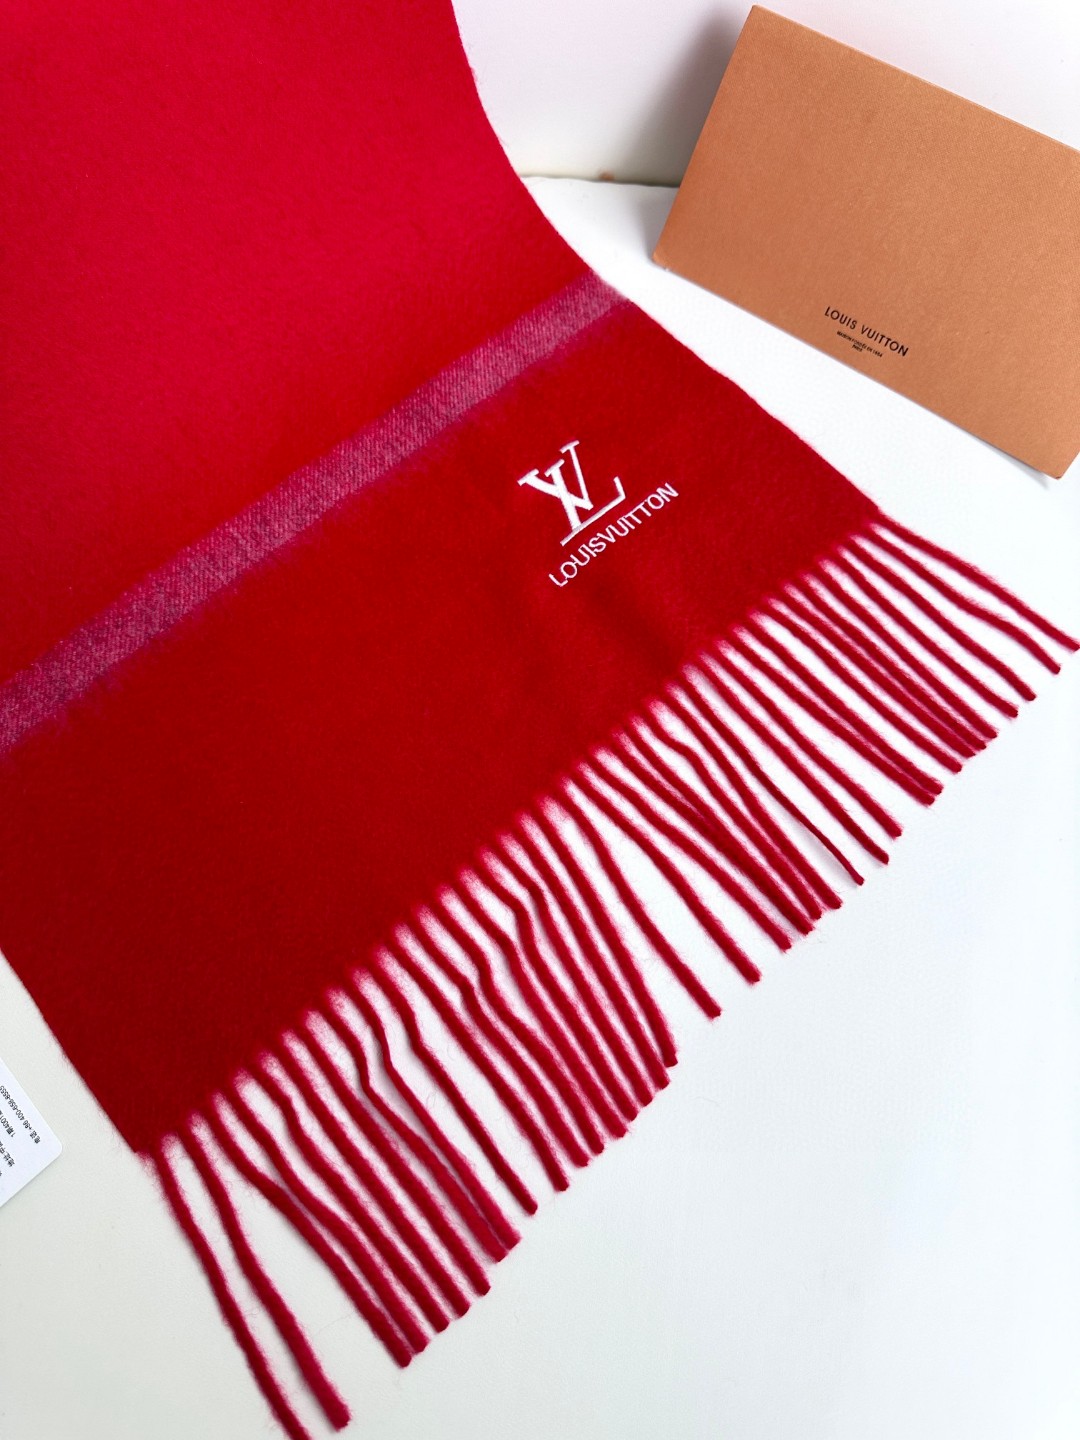 LV刺绣经典素色设计围巾